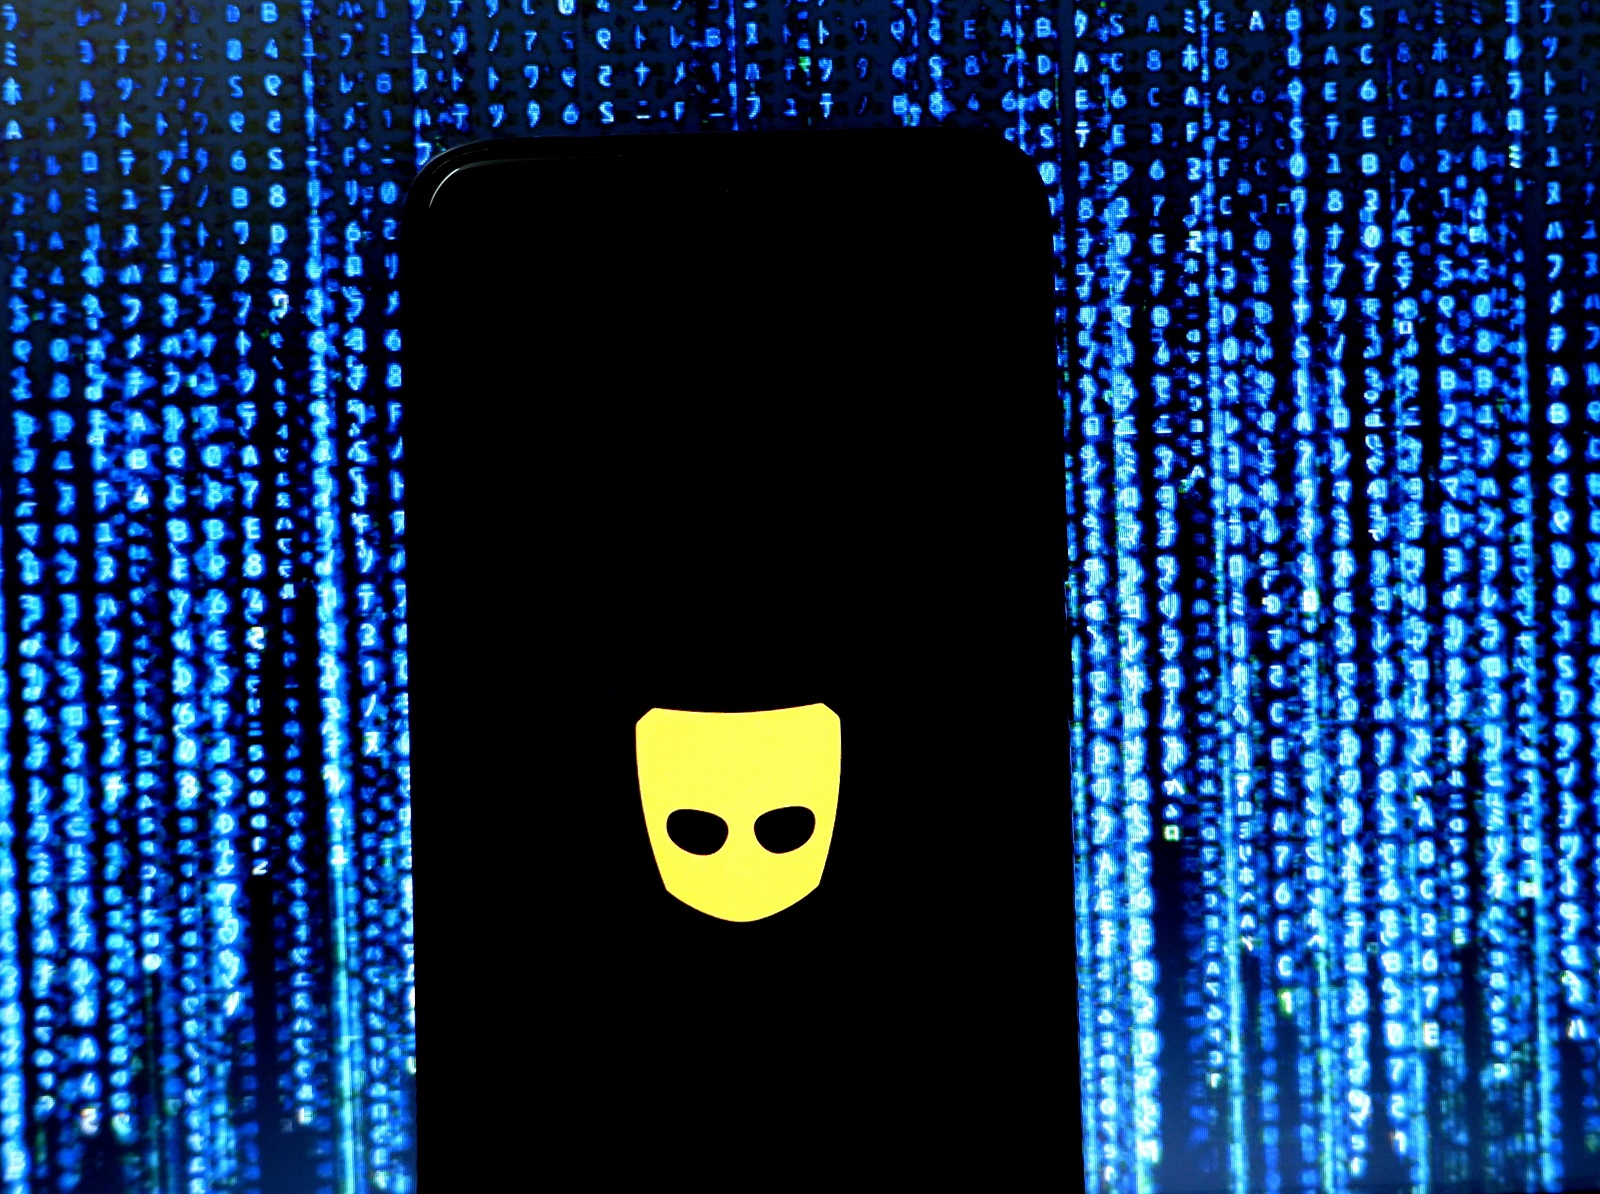 Hook-up app Grindr has been linked to a string of violent crimes